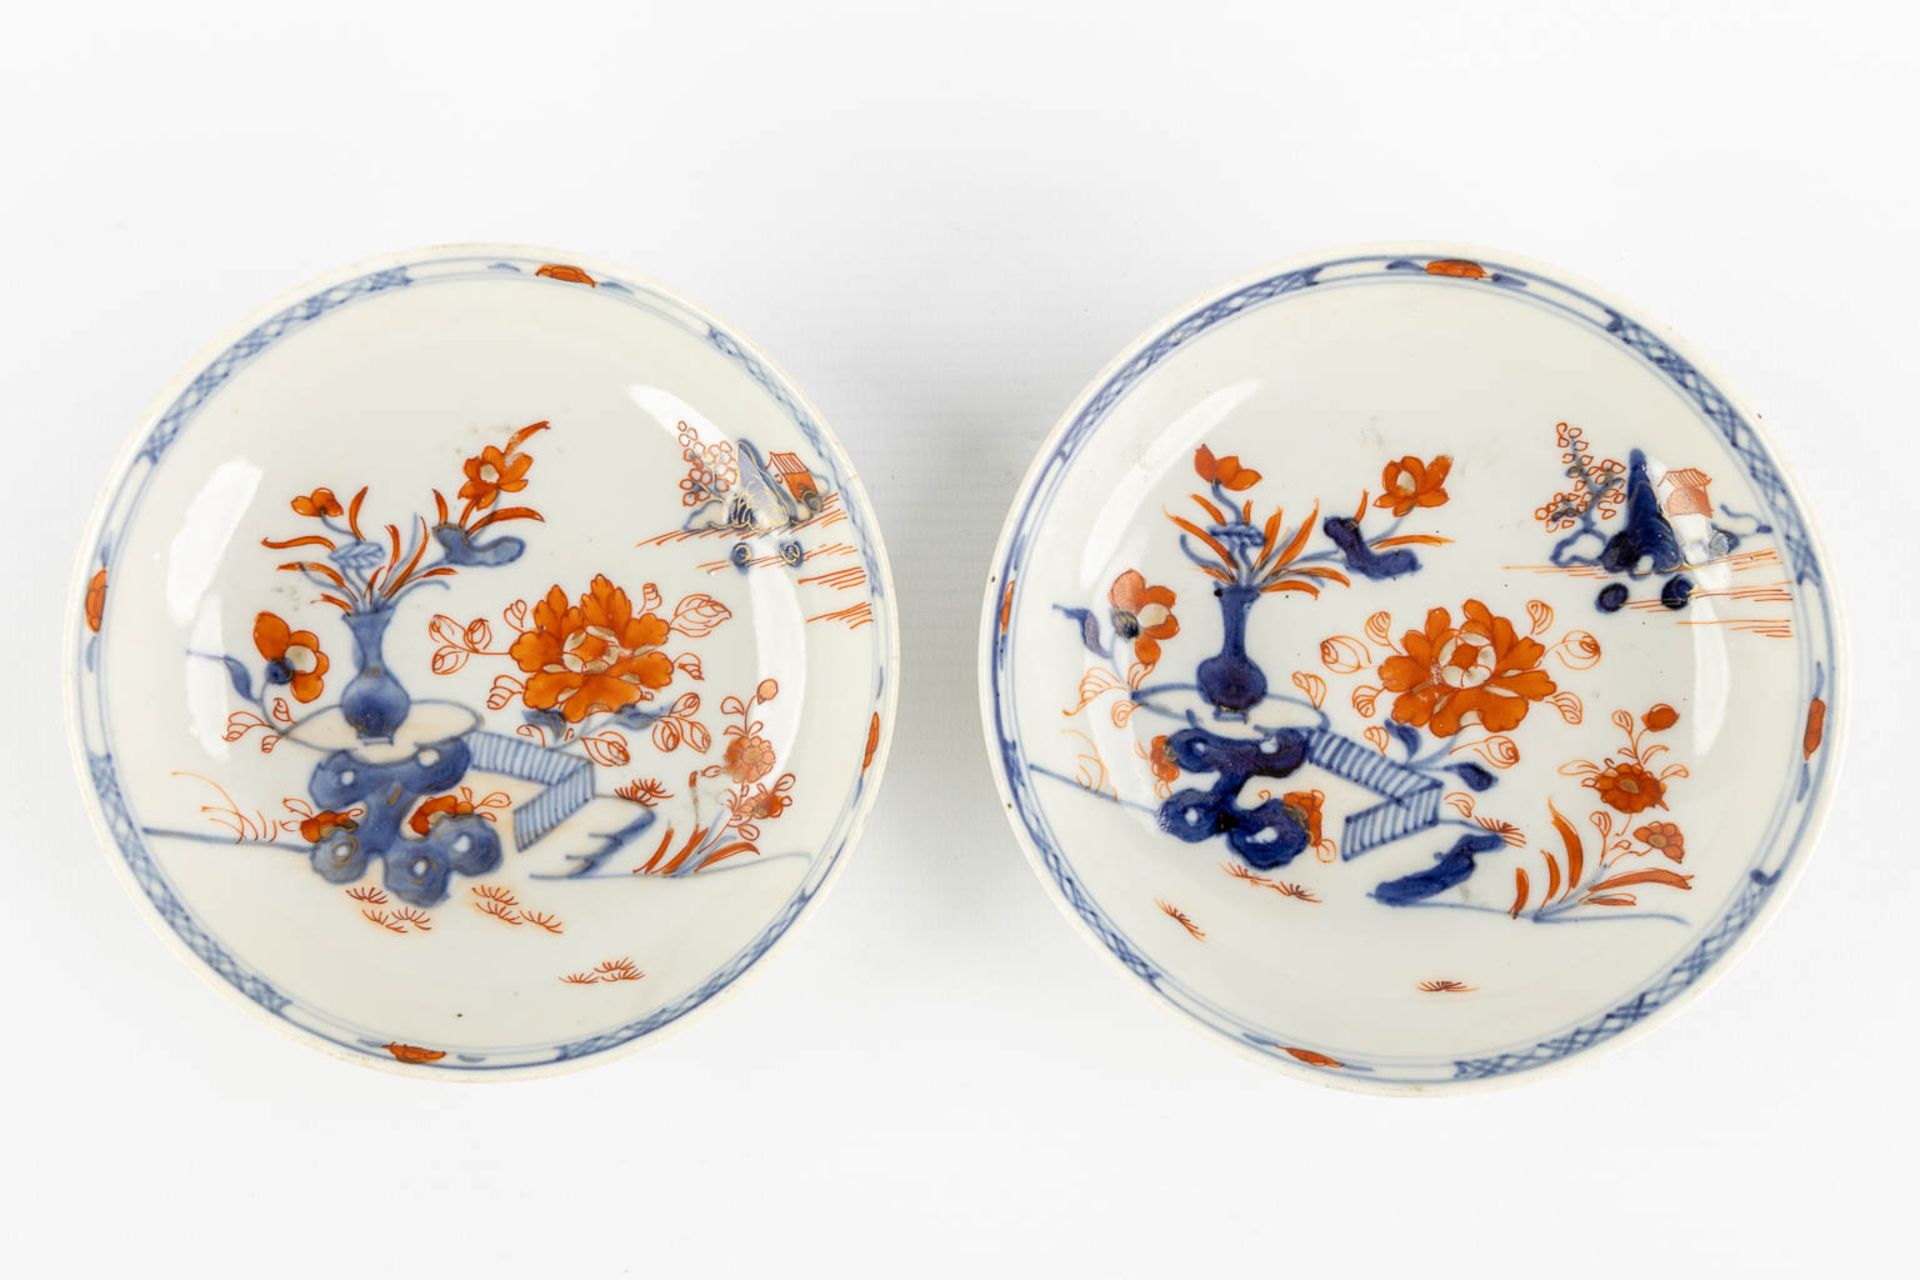 Six pieces of Japanese Imari porcelain, 19th/20th C. (D:23 cm) - Image 9 of 16